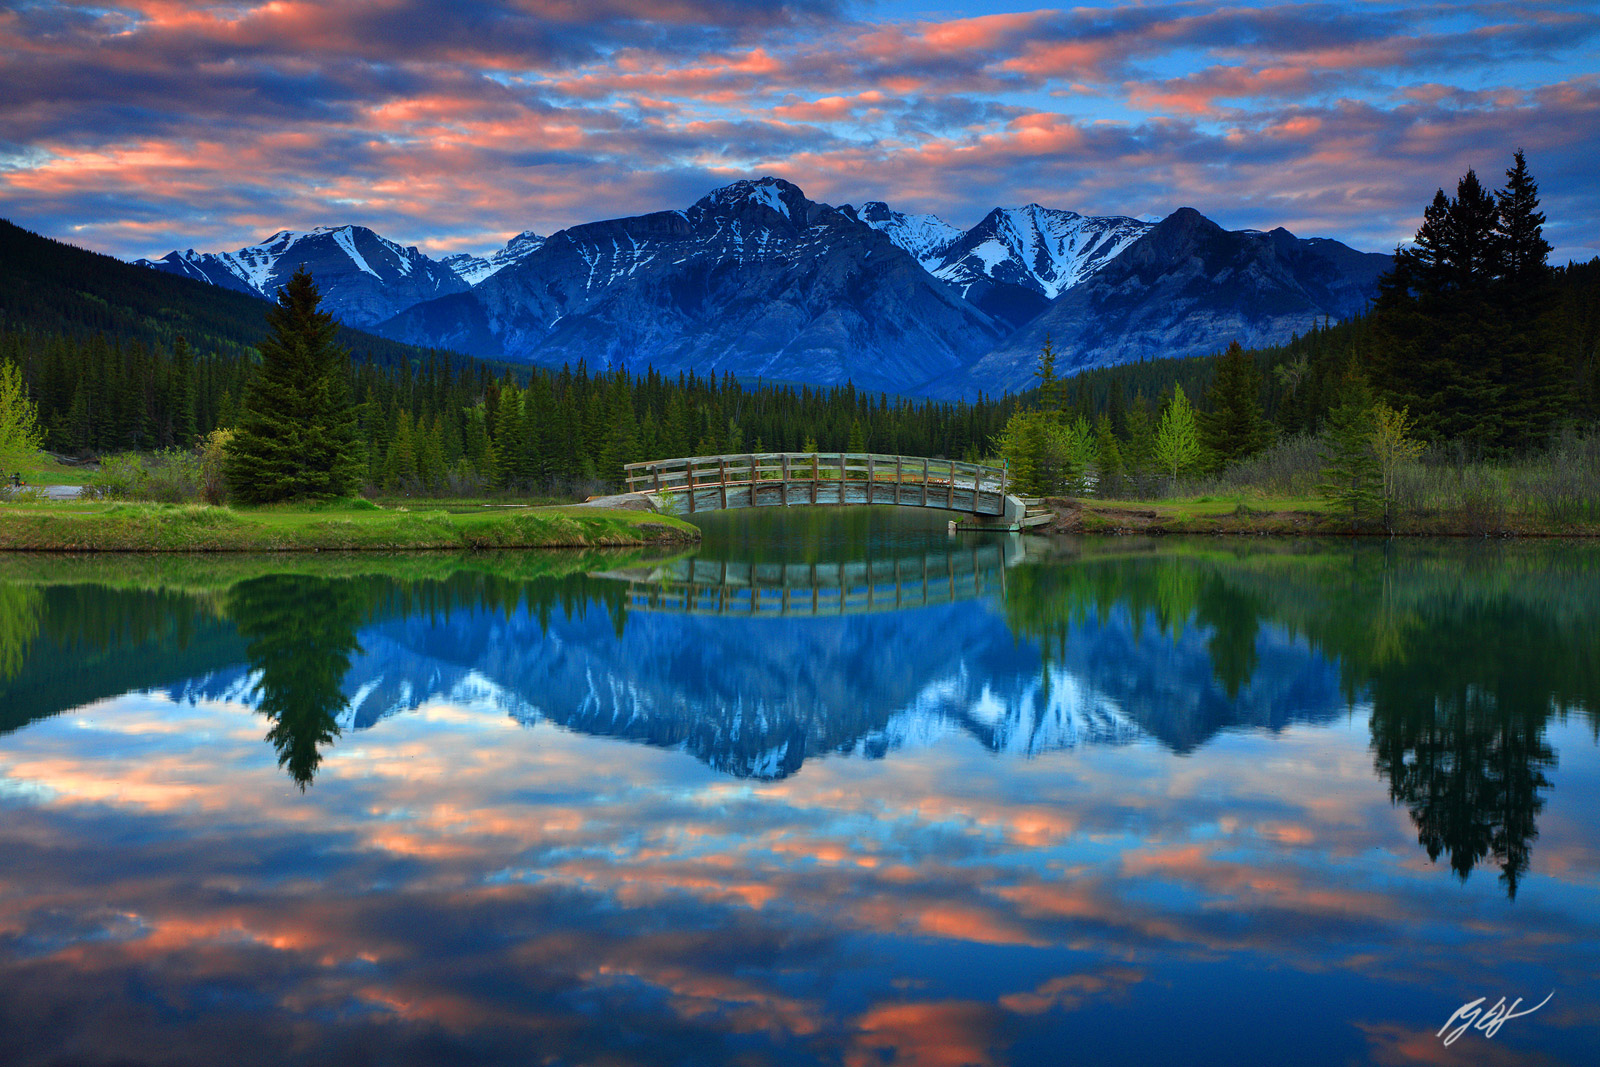 Saddle Peak and Hiking Bridge Reflected in Cascade Ponds in Banff National Park in Alberta Canada